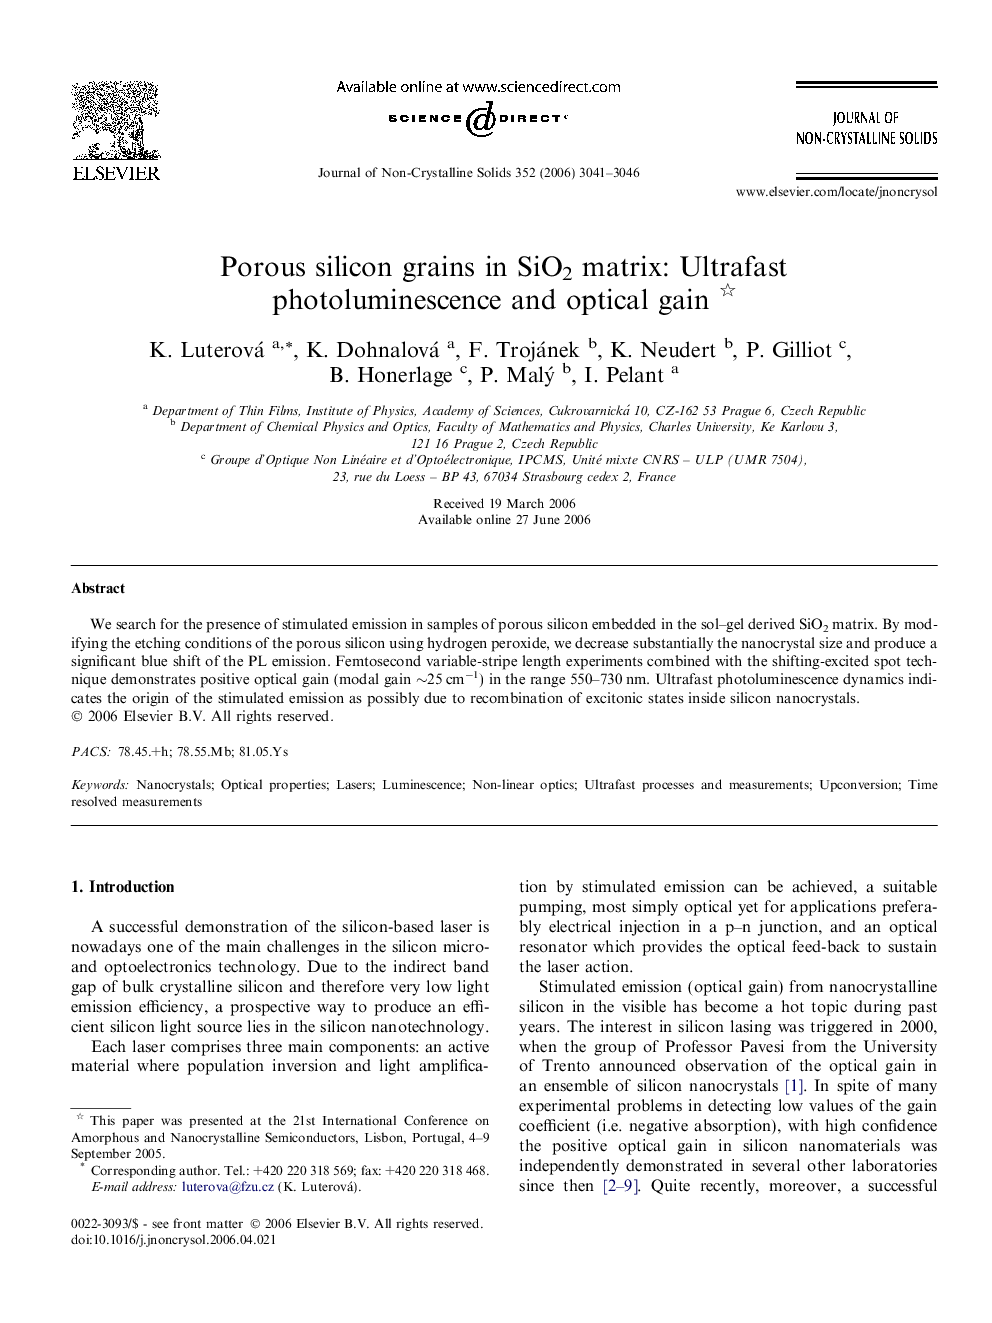 Porous silicon grains in SiO2 matrix: Ultrafast photoluminescence and optical gain